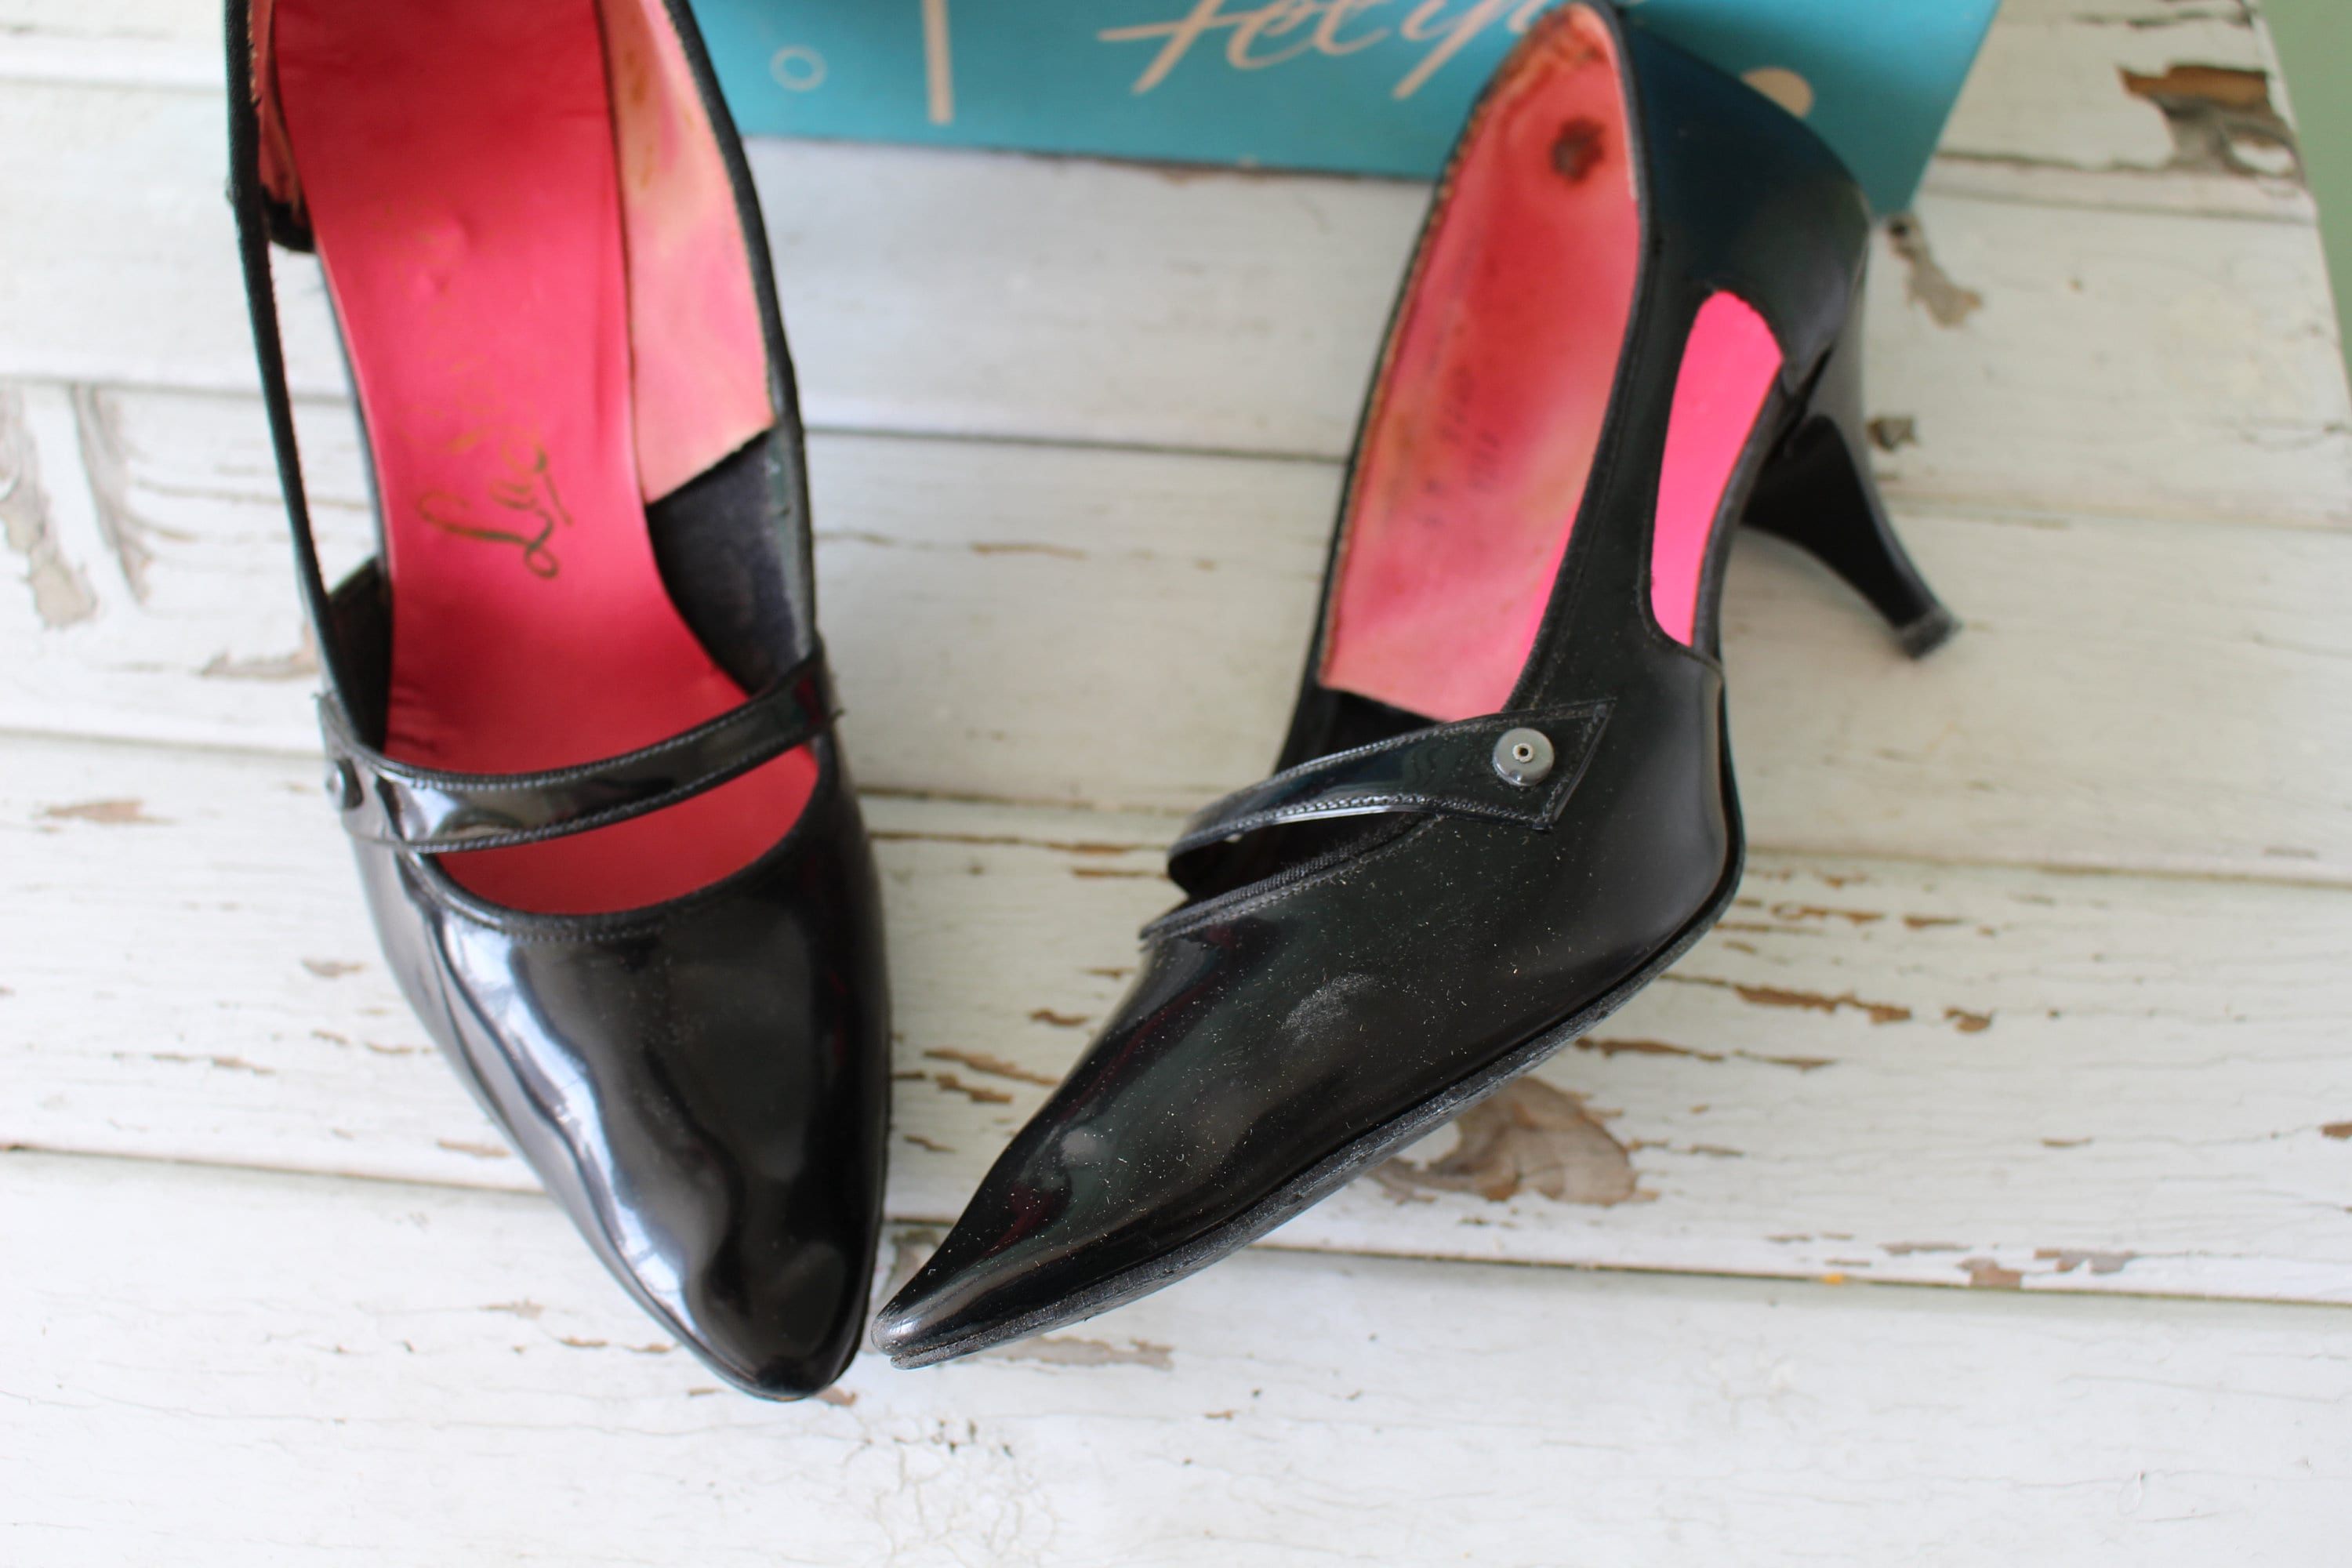 designer fancy shoes 1960s FANCY Heels..size 6.5 women..cocktail party black leather heels classic twiggy party pumps mod